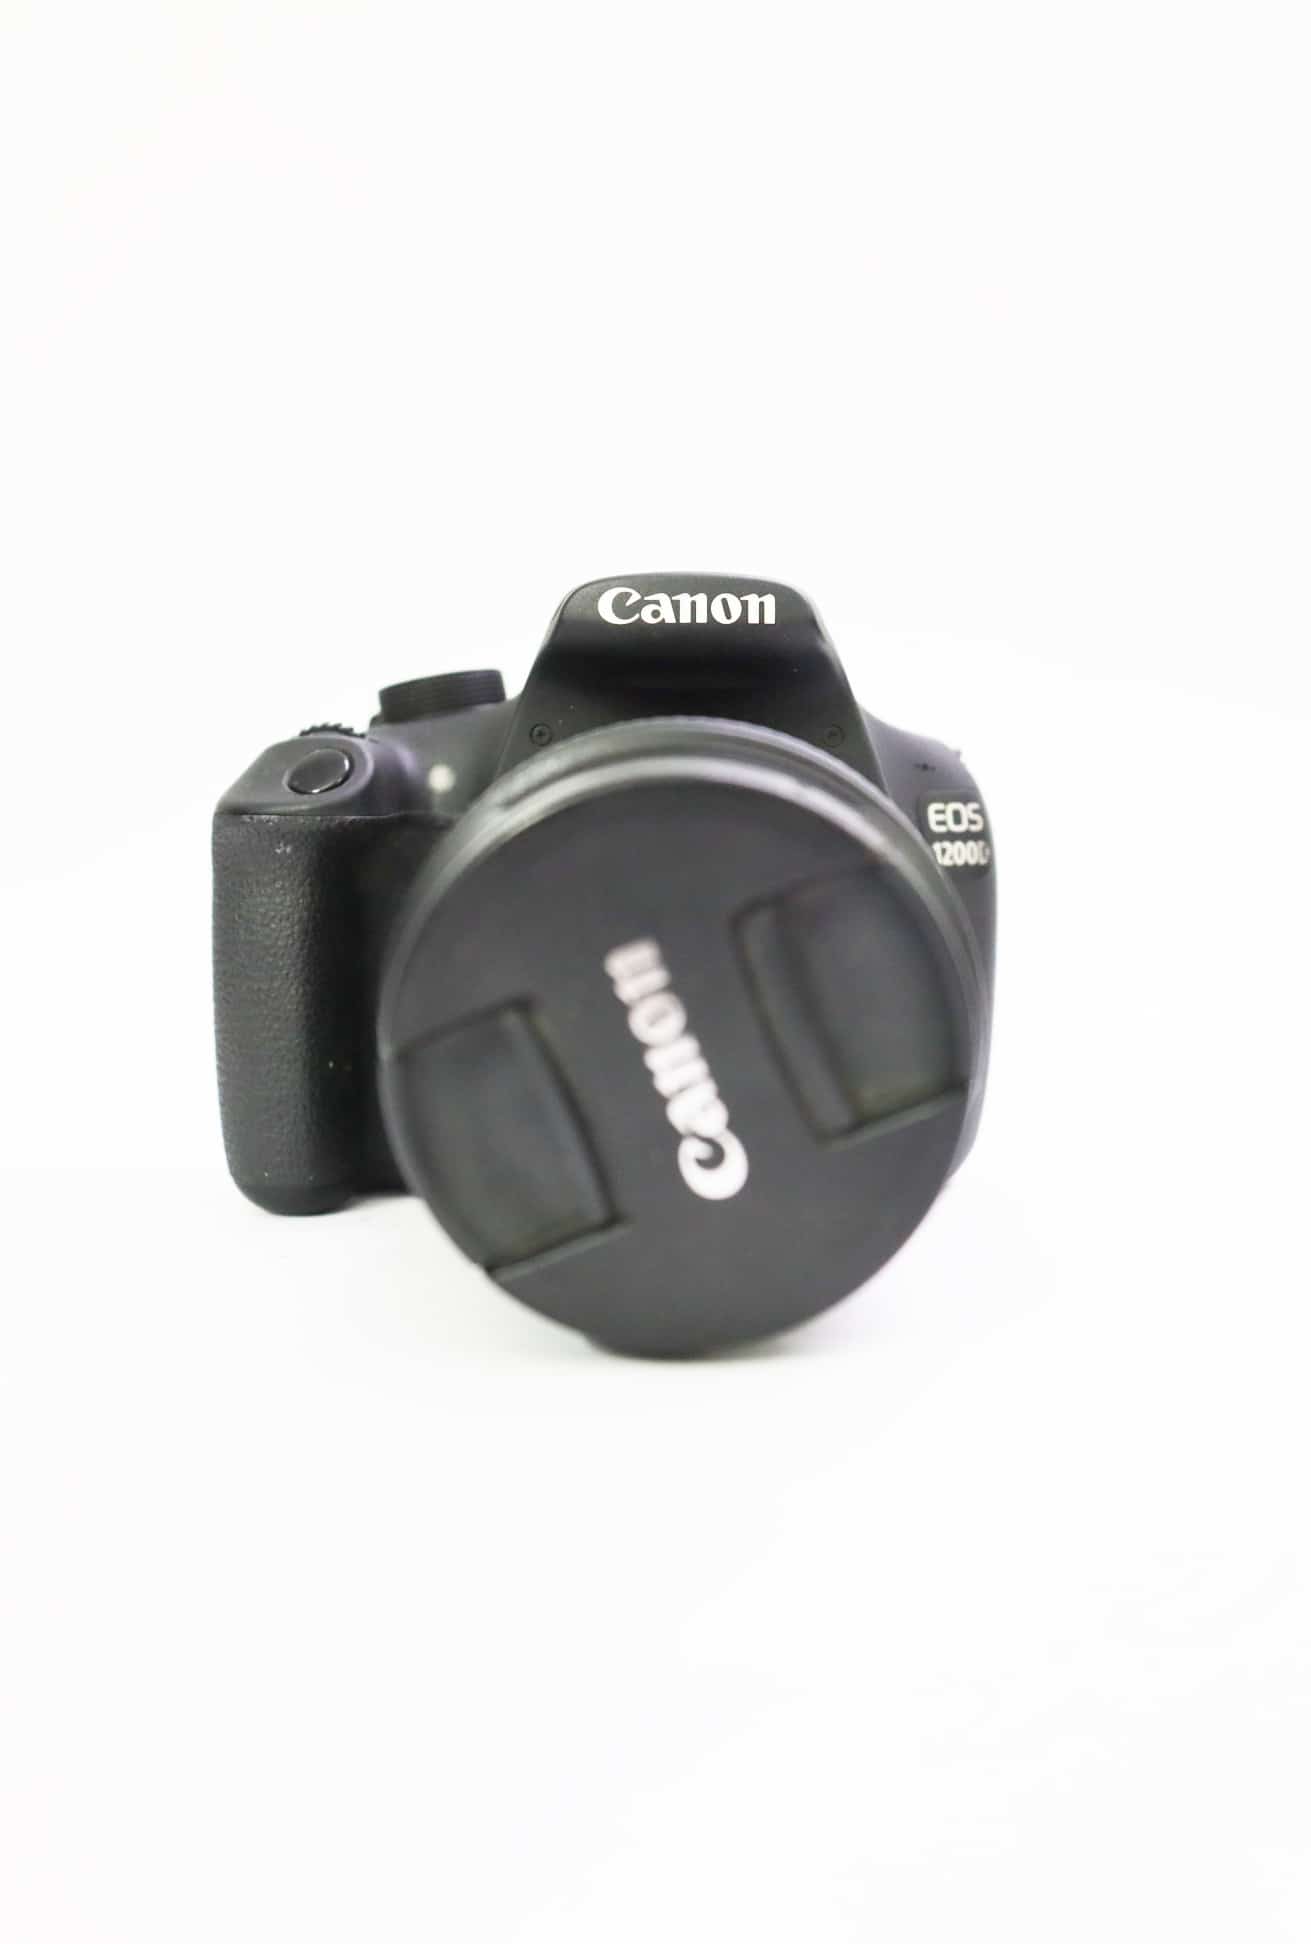 Used Canon 1200D Camera